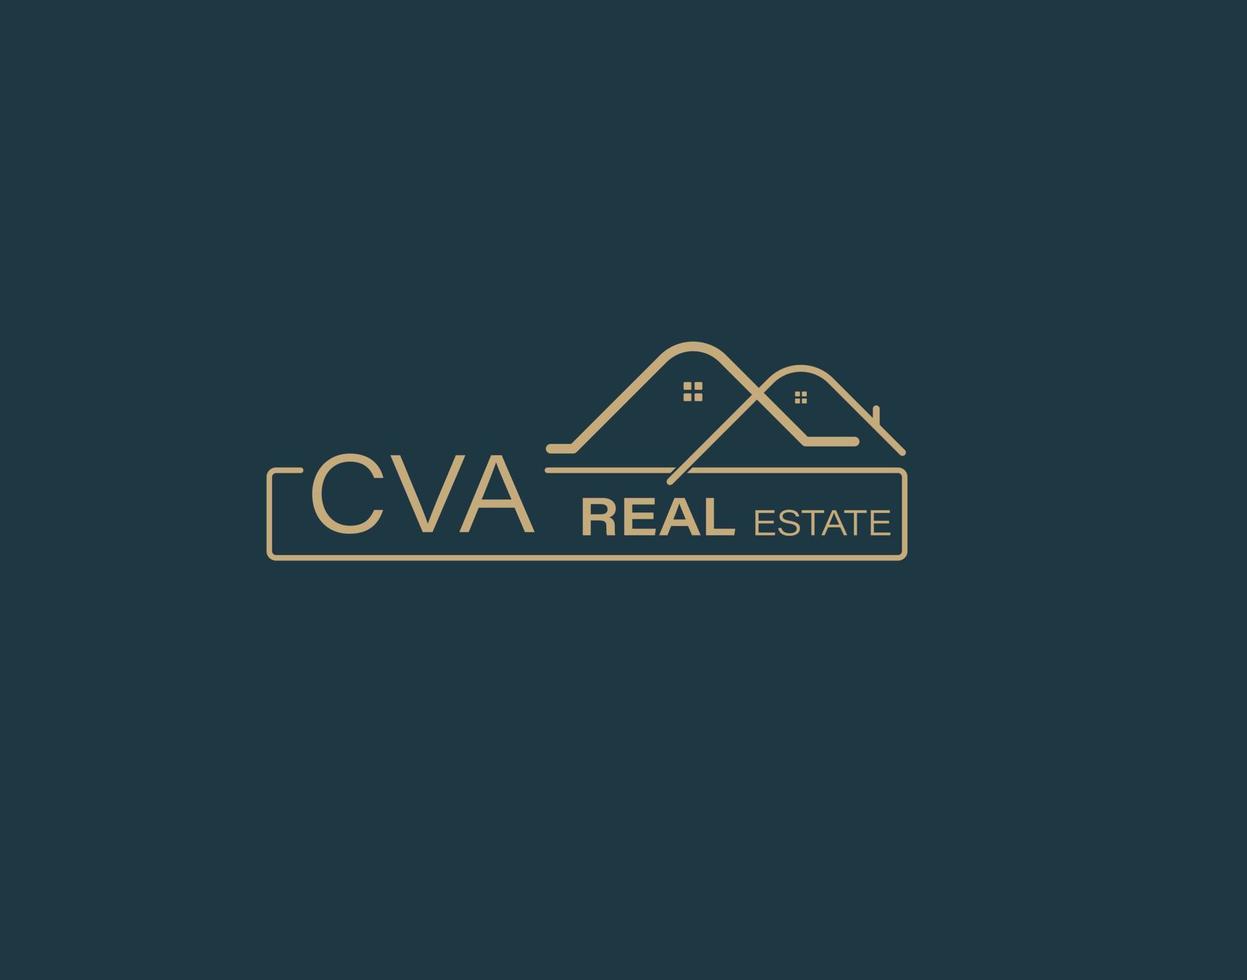 CVA Real Estate and Consultants Logo Design Vectors images. Luxury Real Estate Logo Design